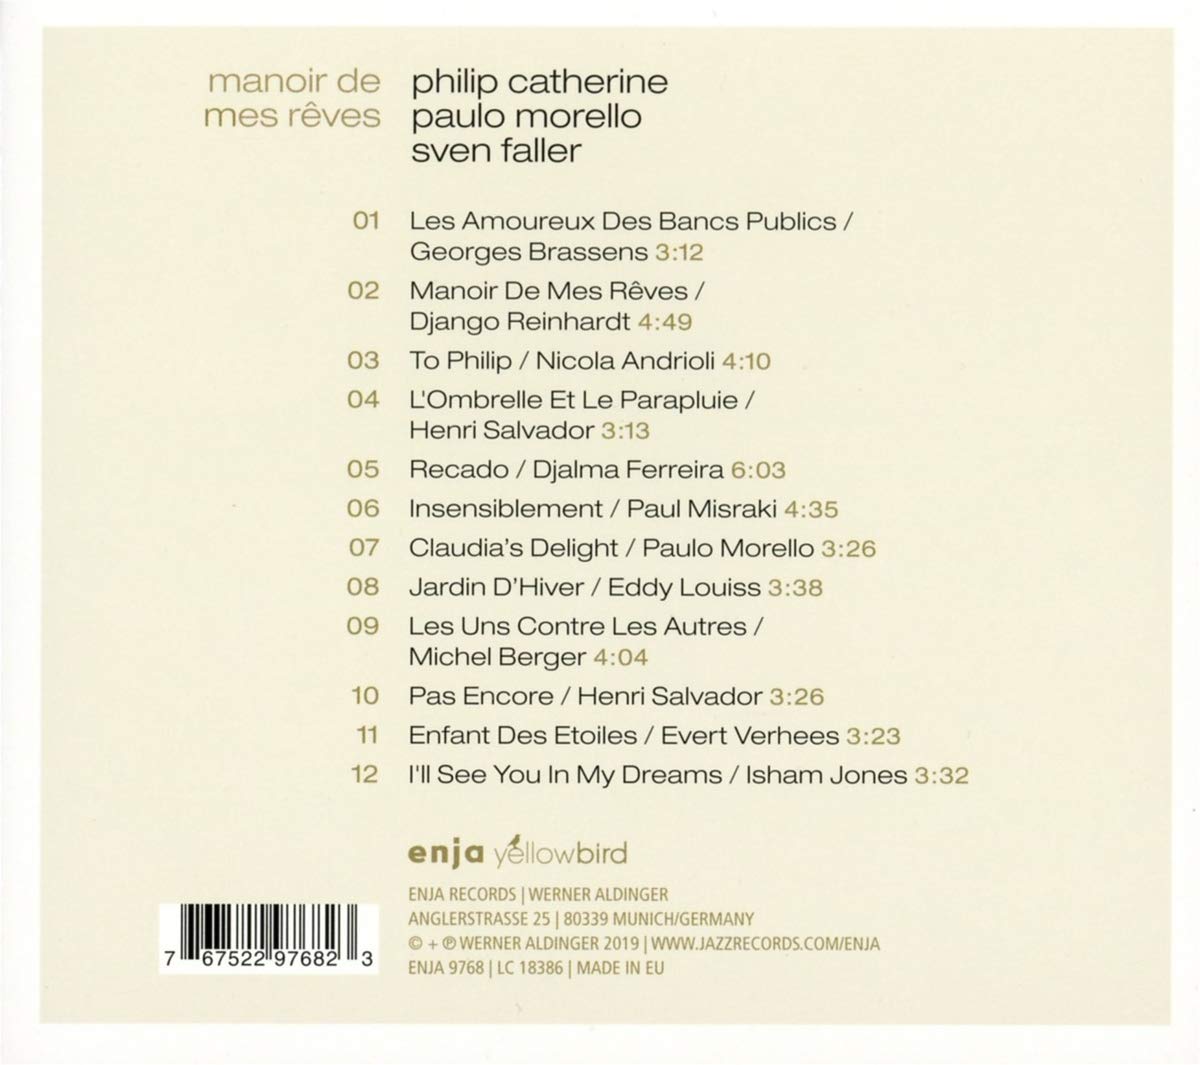 Philip Catherine / Paulo Morello / Sven Faller (필립 캐서린 / 파울로 모렐로 / 스벤 팔러) - Manoir de mes reves 